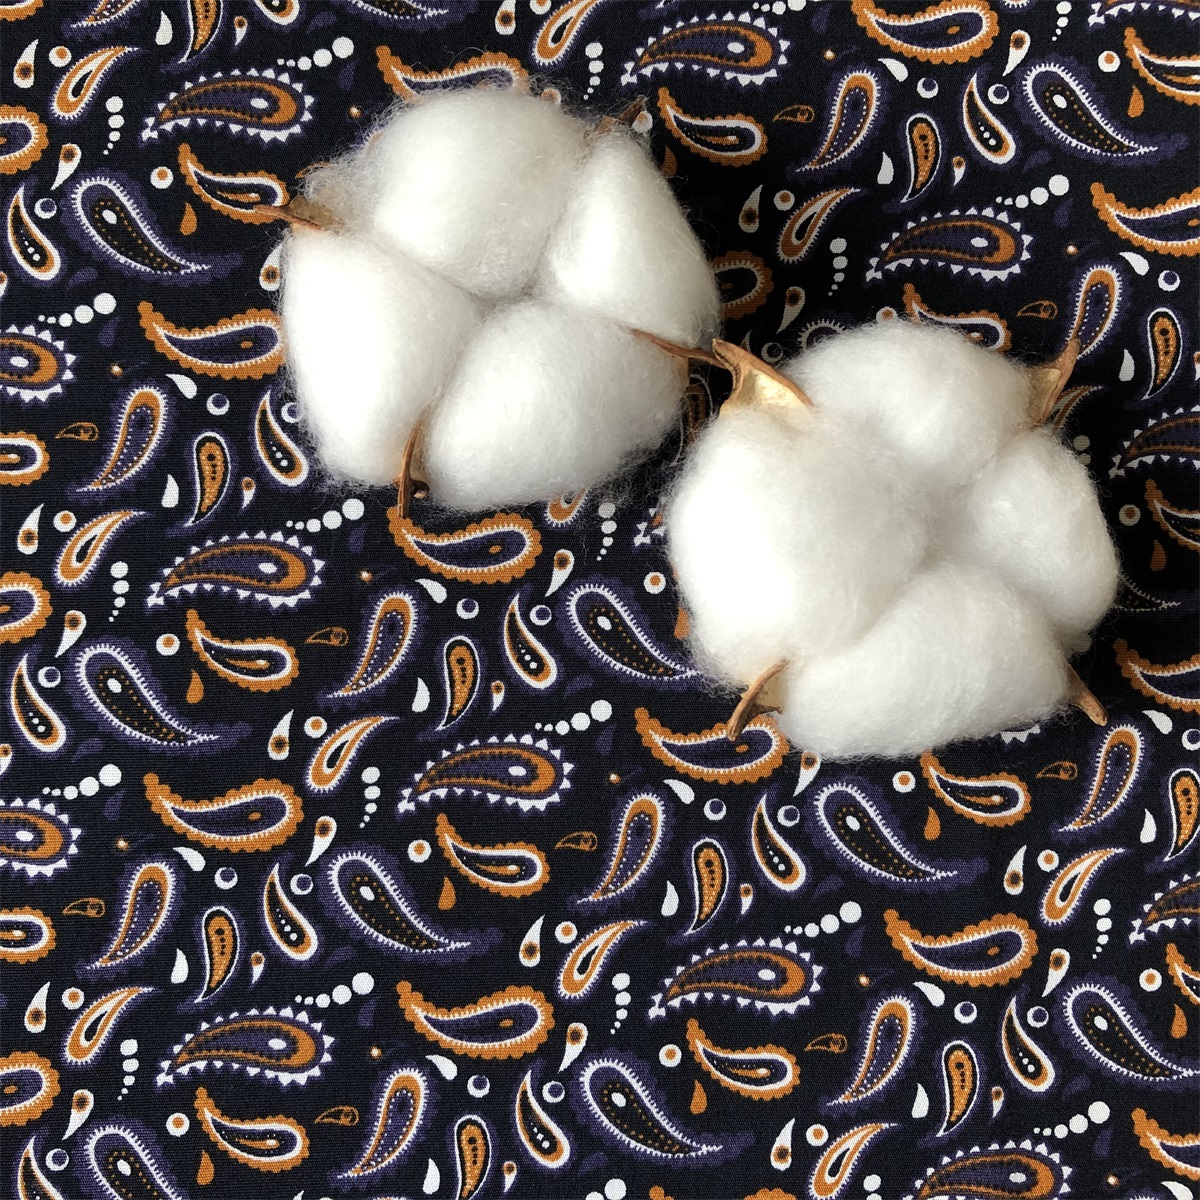 China Printed fabric cotton spandex stretch elasthane poplin shirts fabric manufacturer